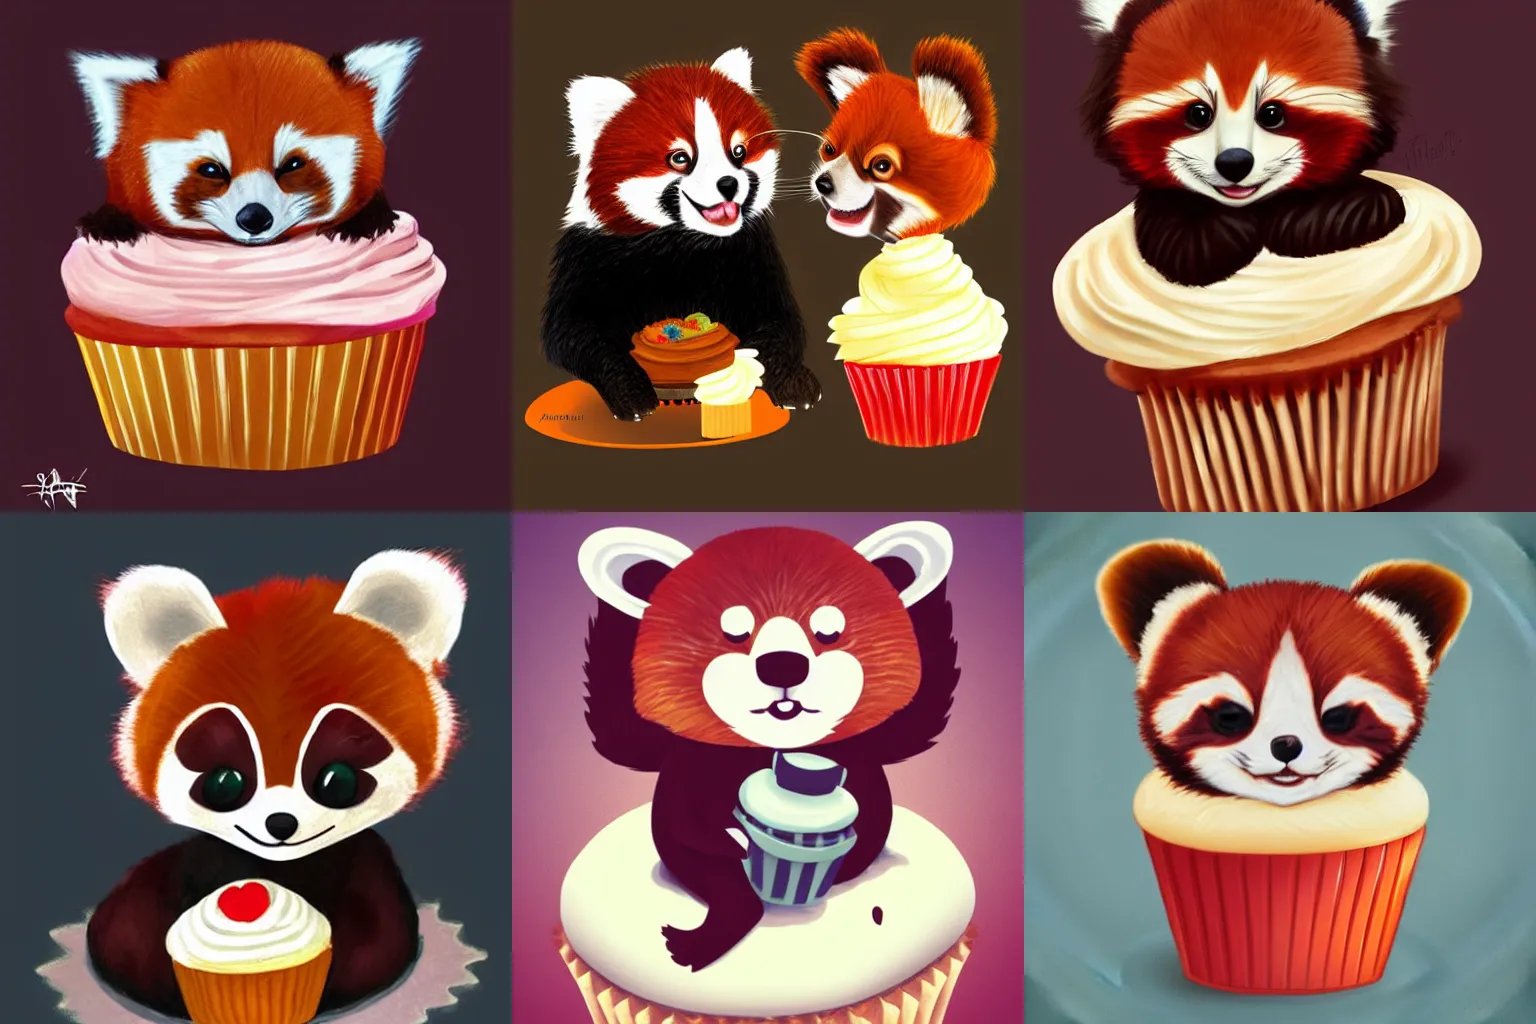 Prompt: an adorable red panda hugging a cupcake, trending on artstation,